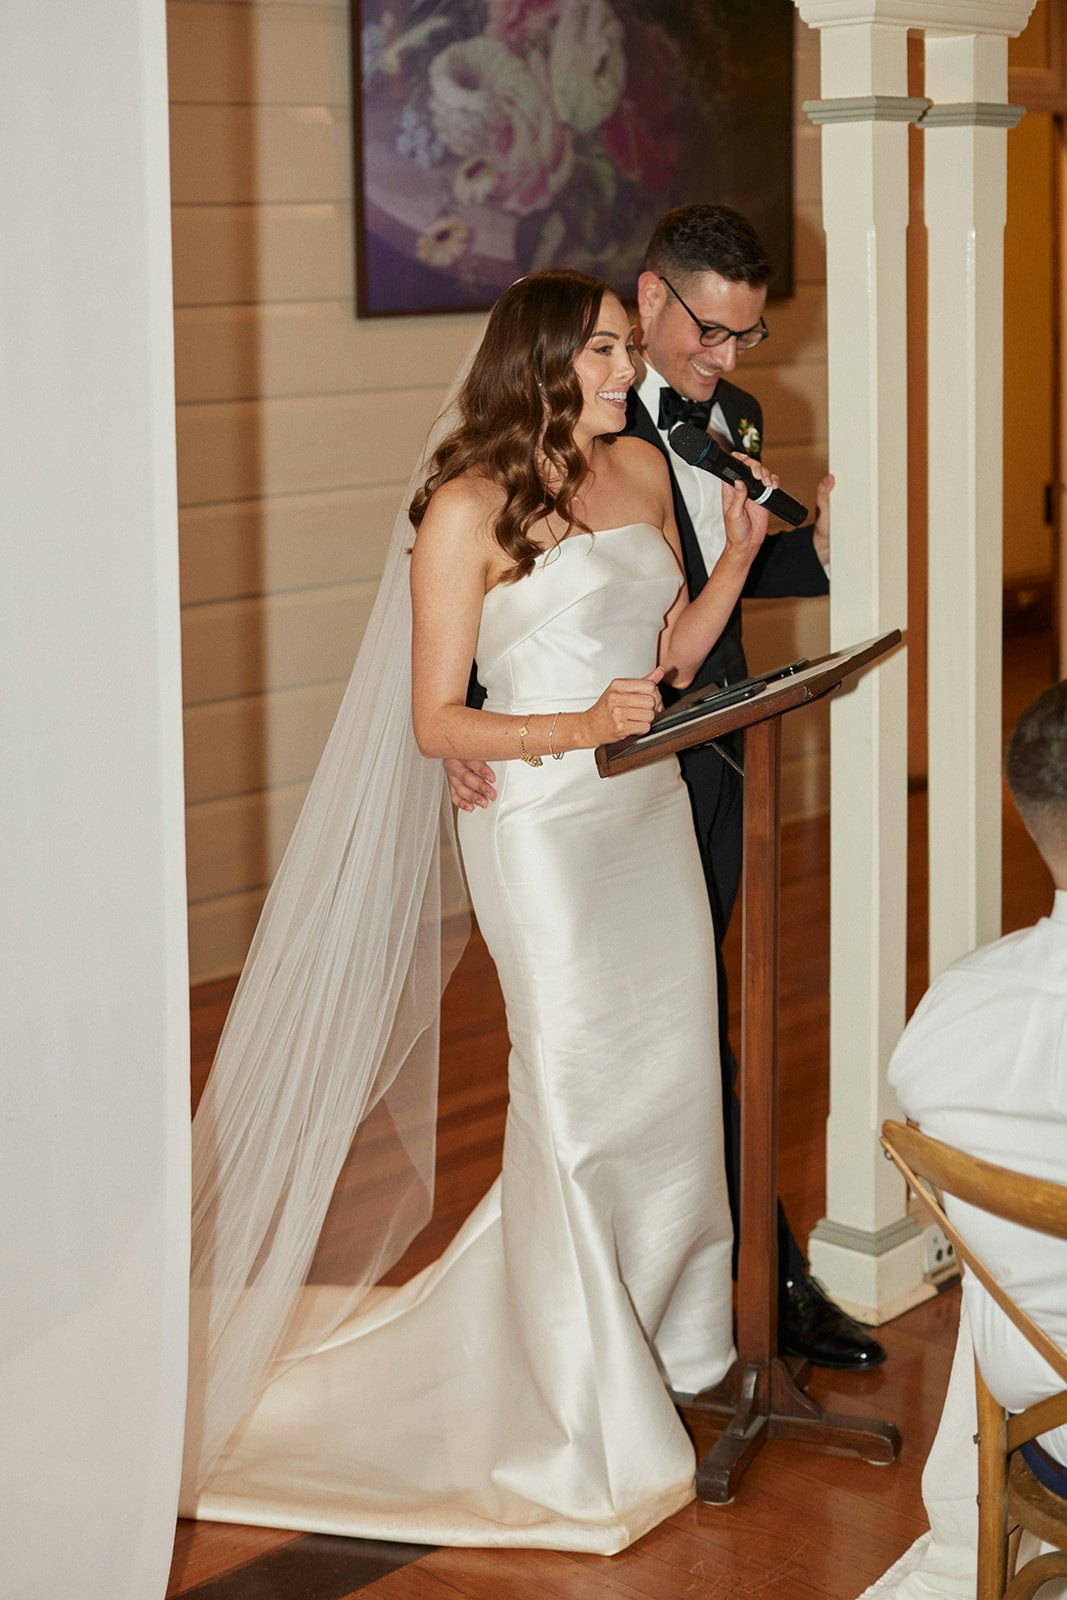 Bride and groom giving speech